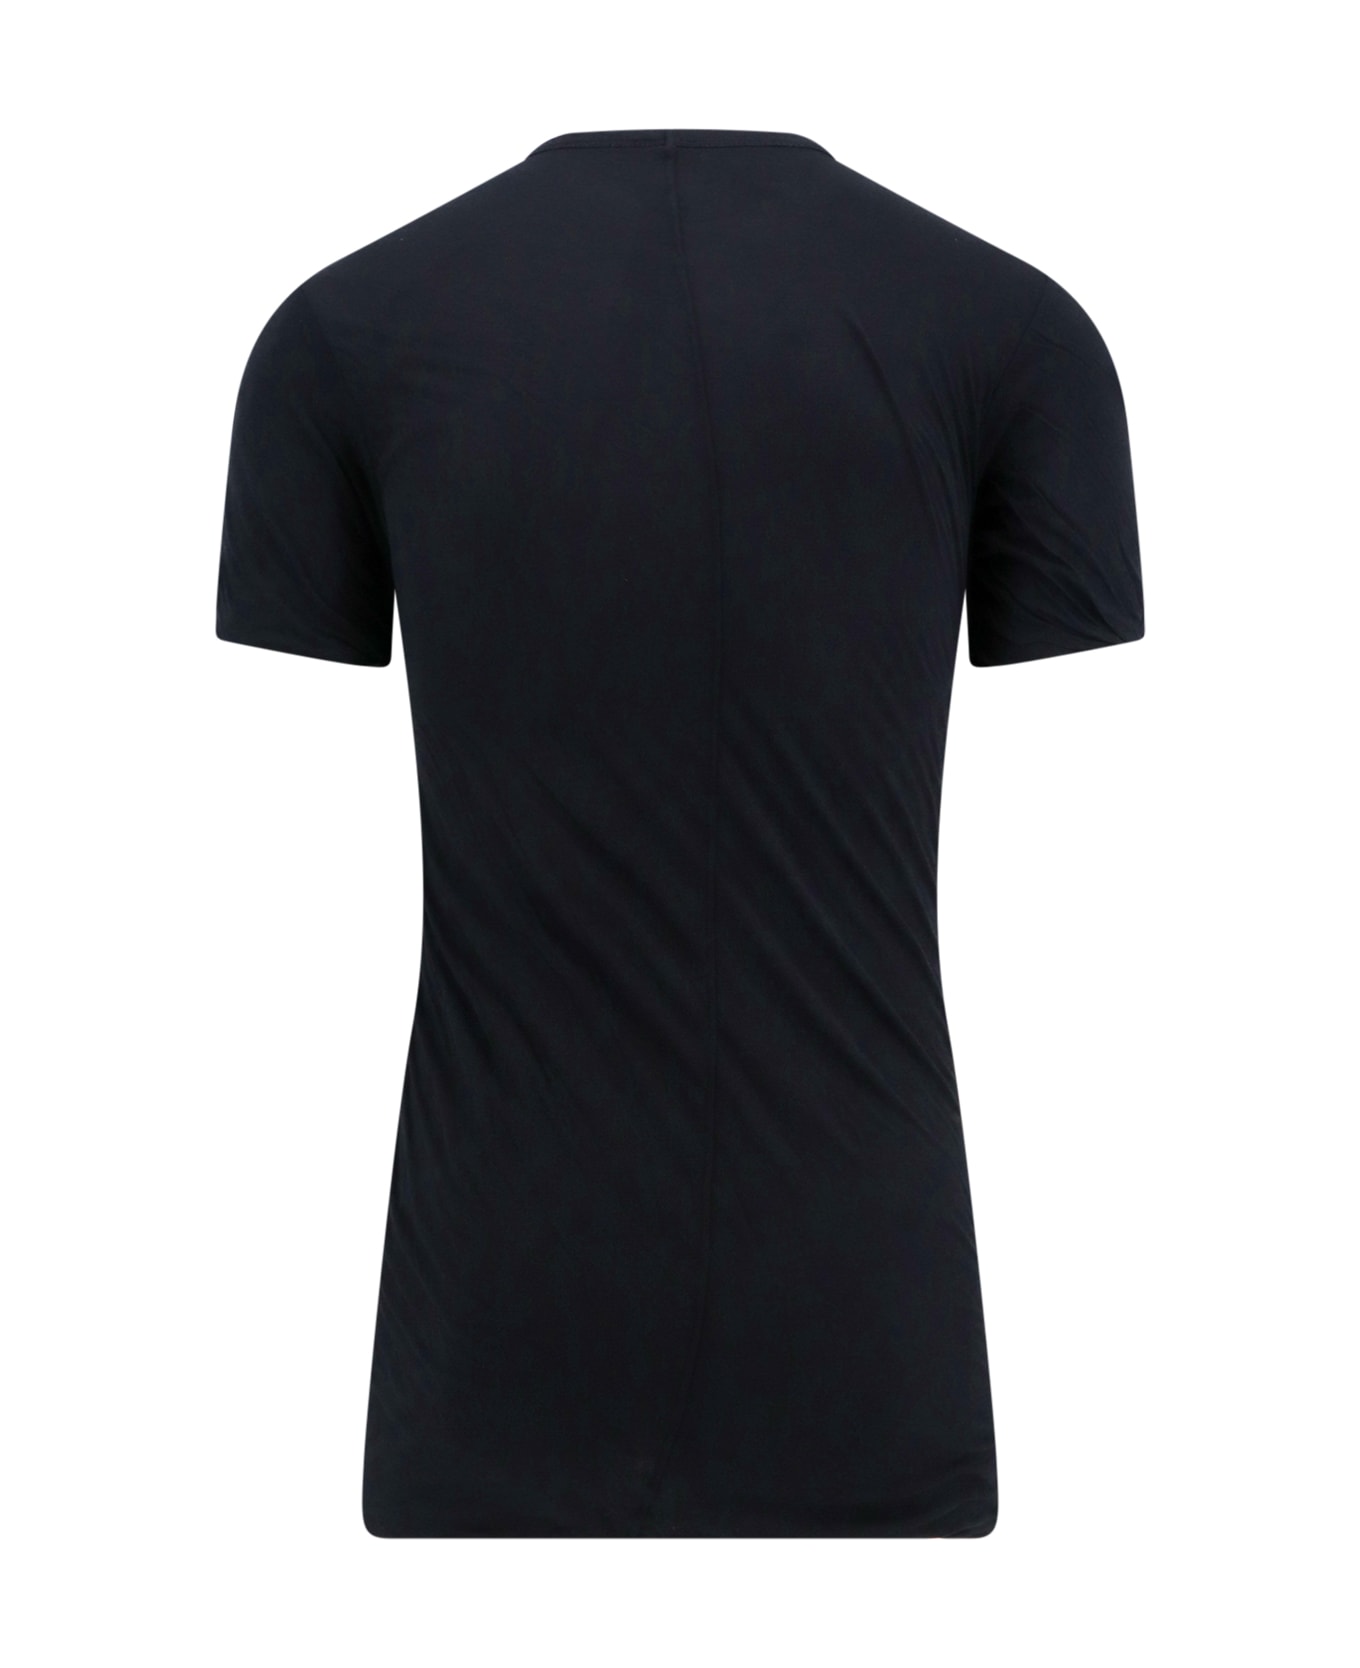 Rick Owens T-shirt - Black